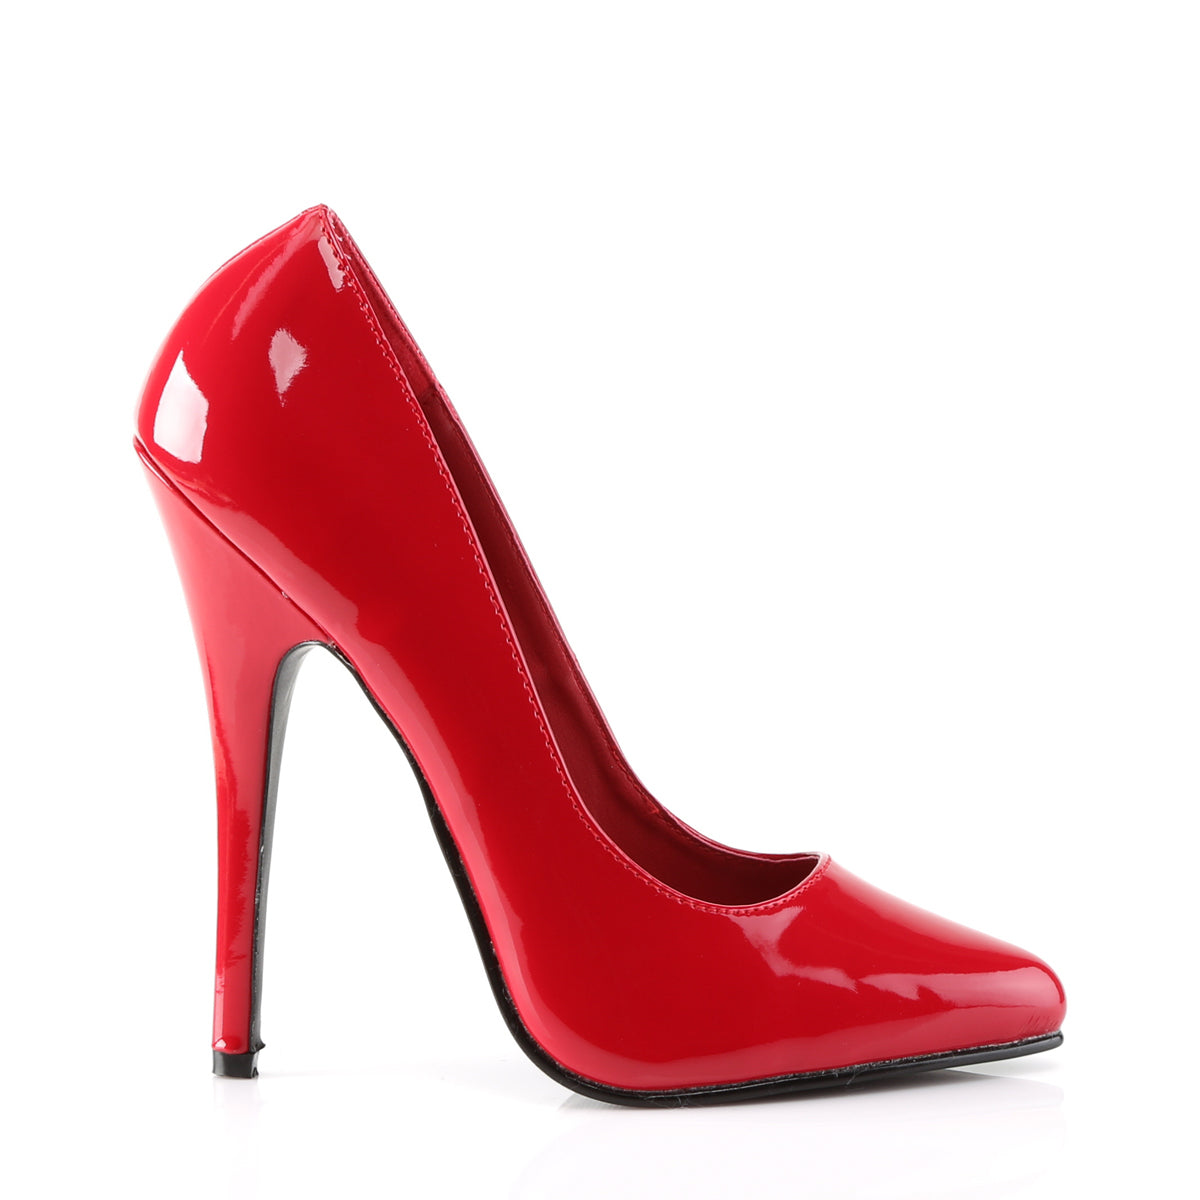 DOMINA-420 Devious Heels Red Patent Single Soles [Fetish Heels]